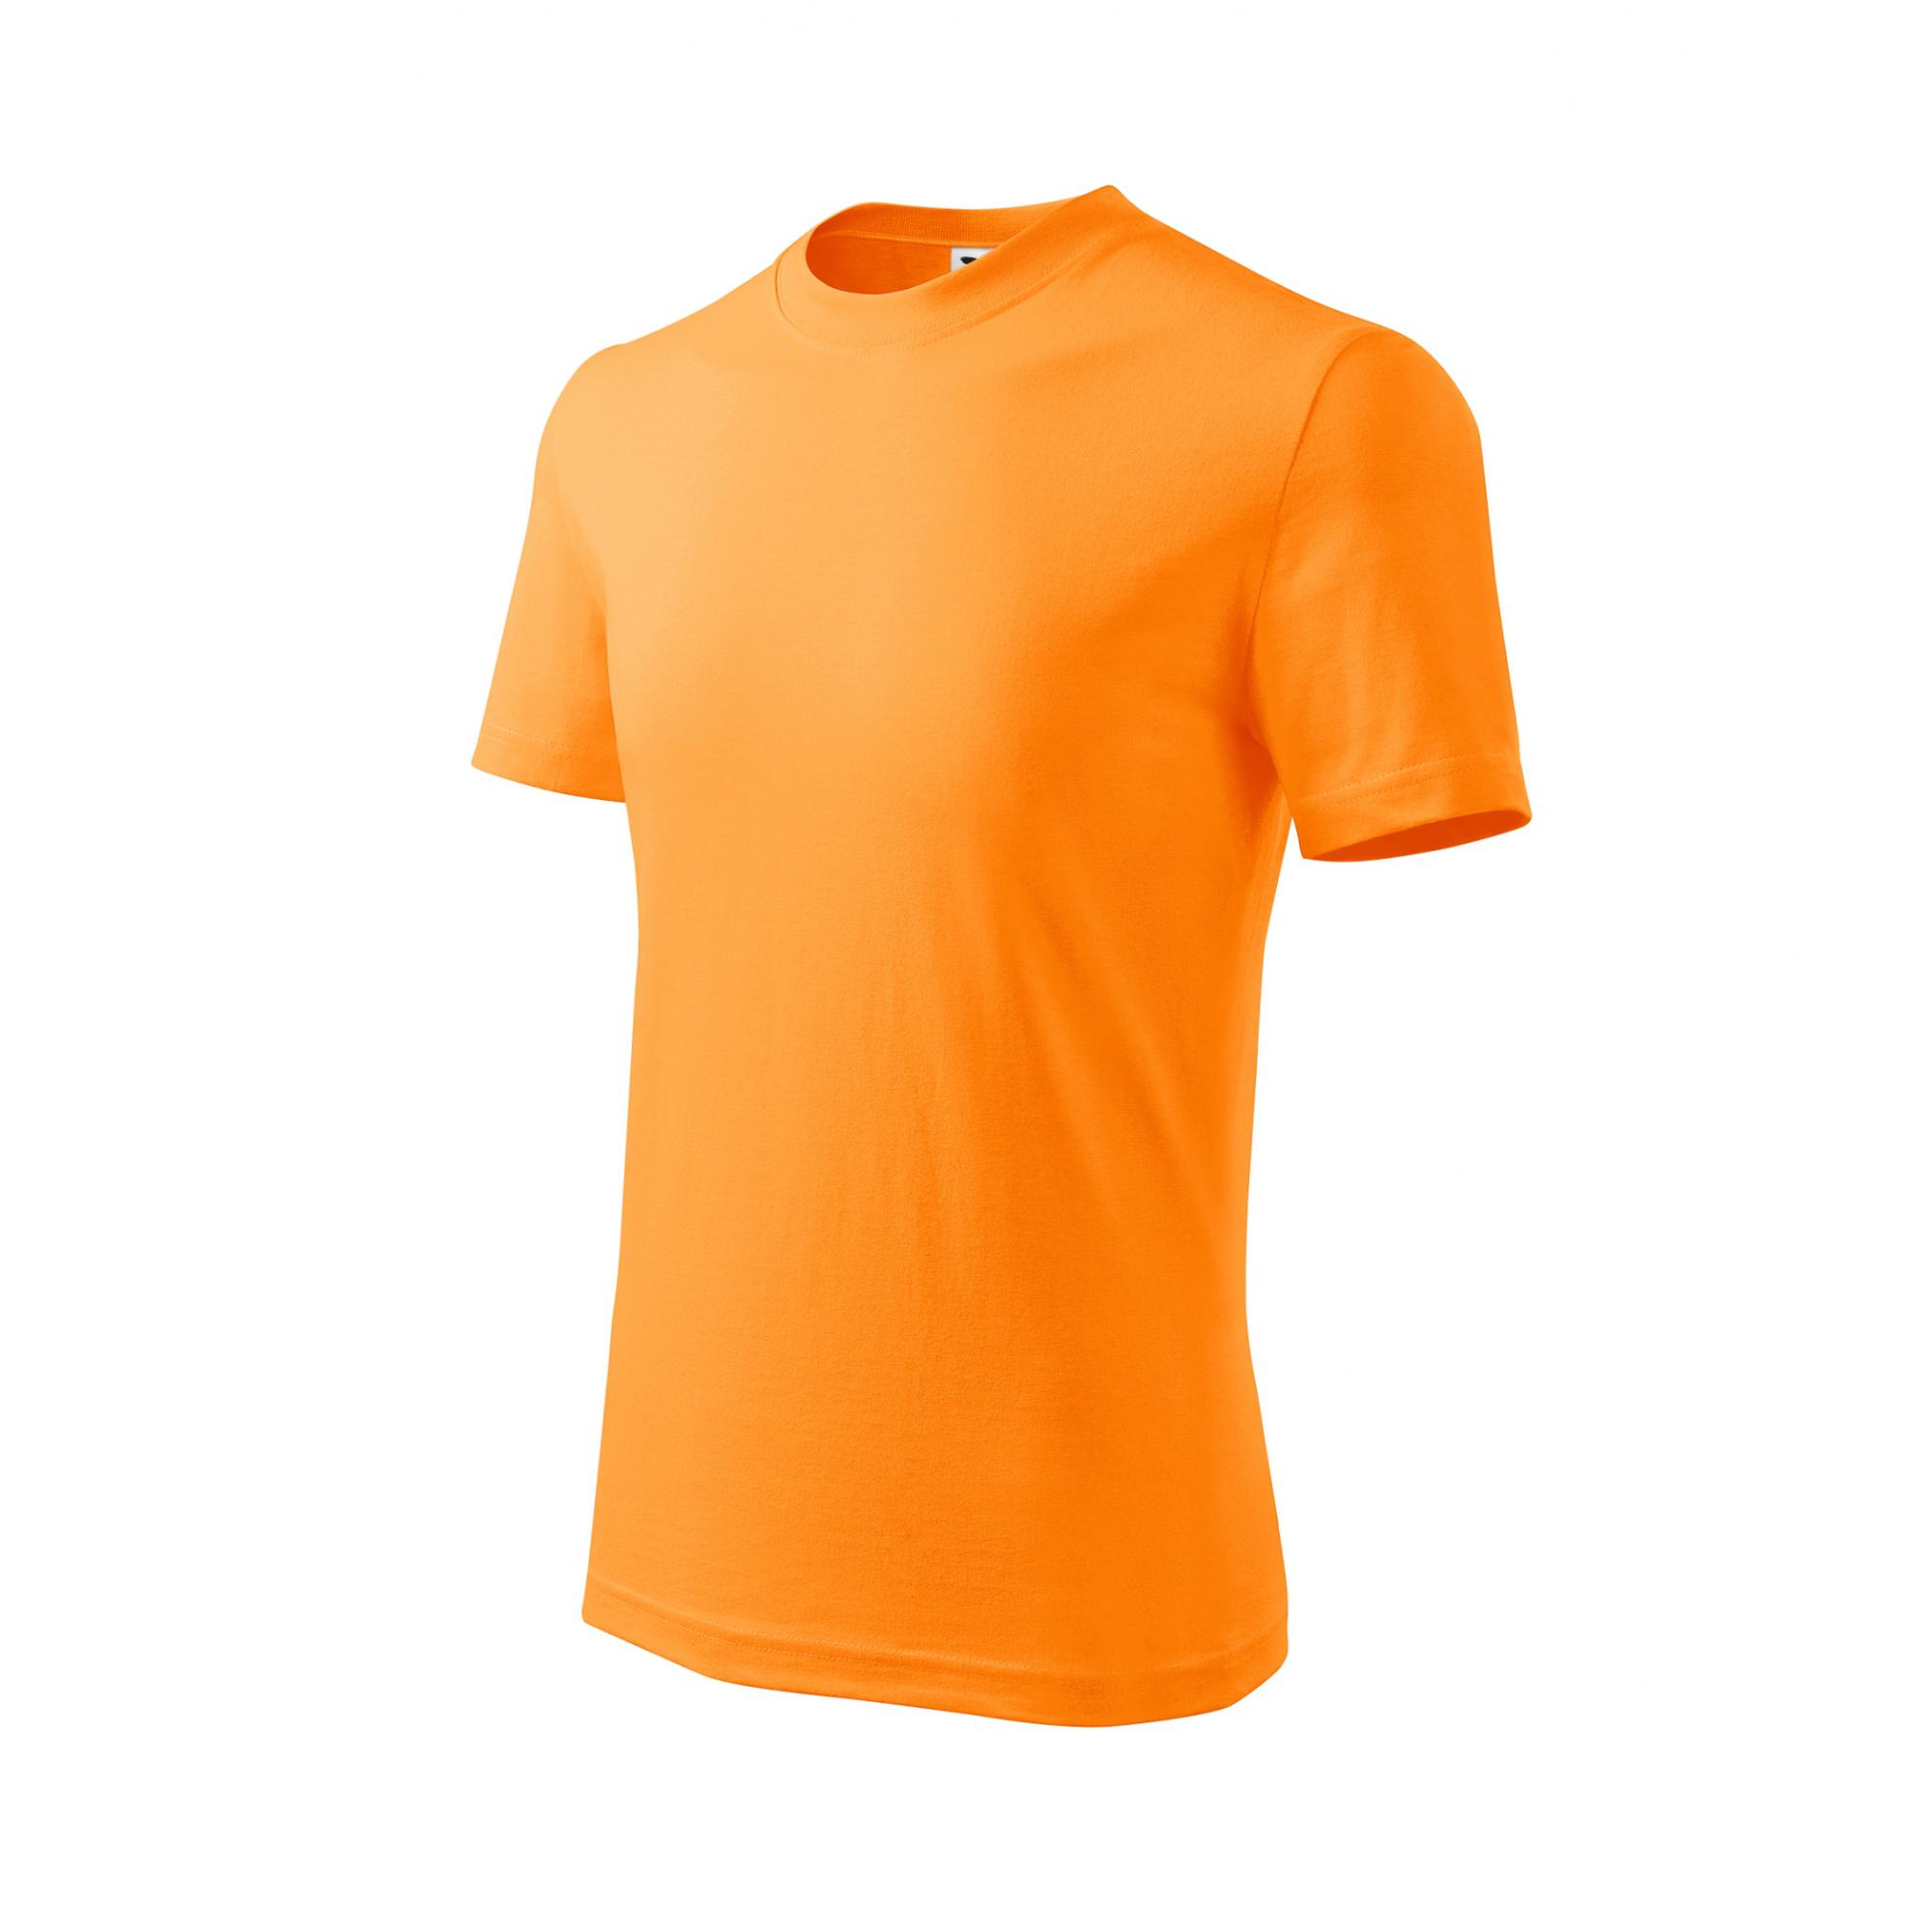 Tricou pentru copii Basic 138 Tangerine orange 6ani